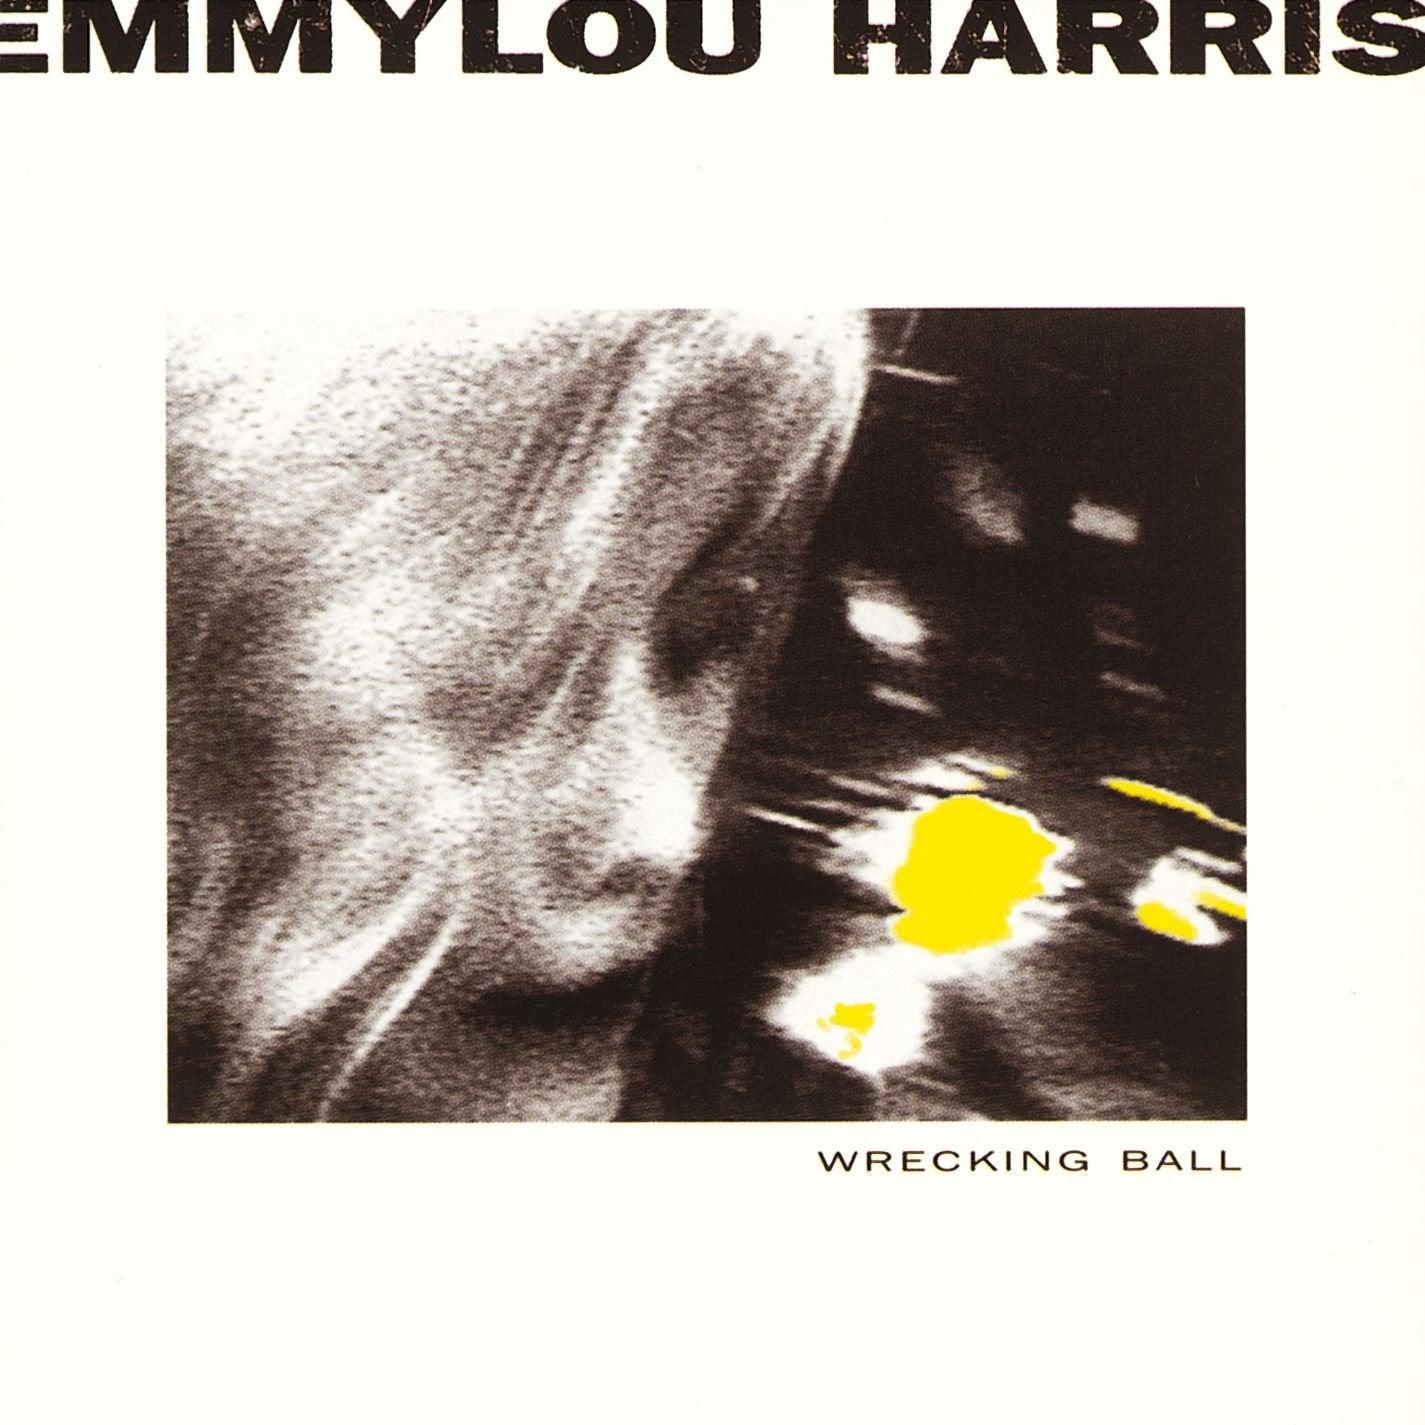 Emmylou Harris- Wrecking Ball - Darkside Records